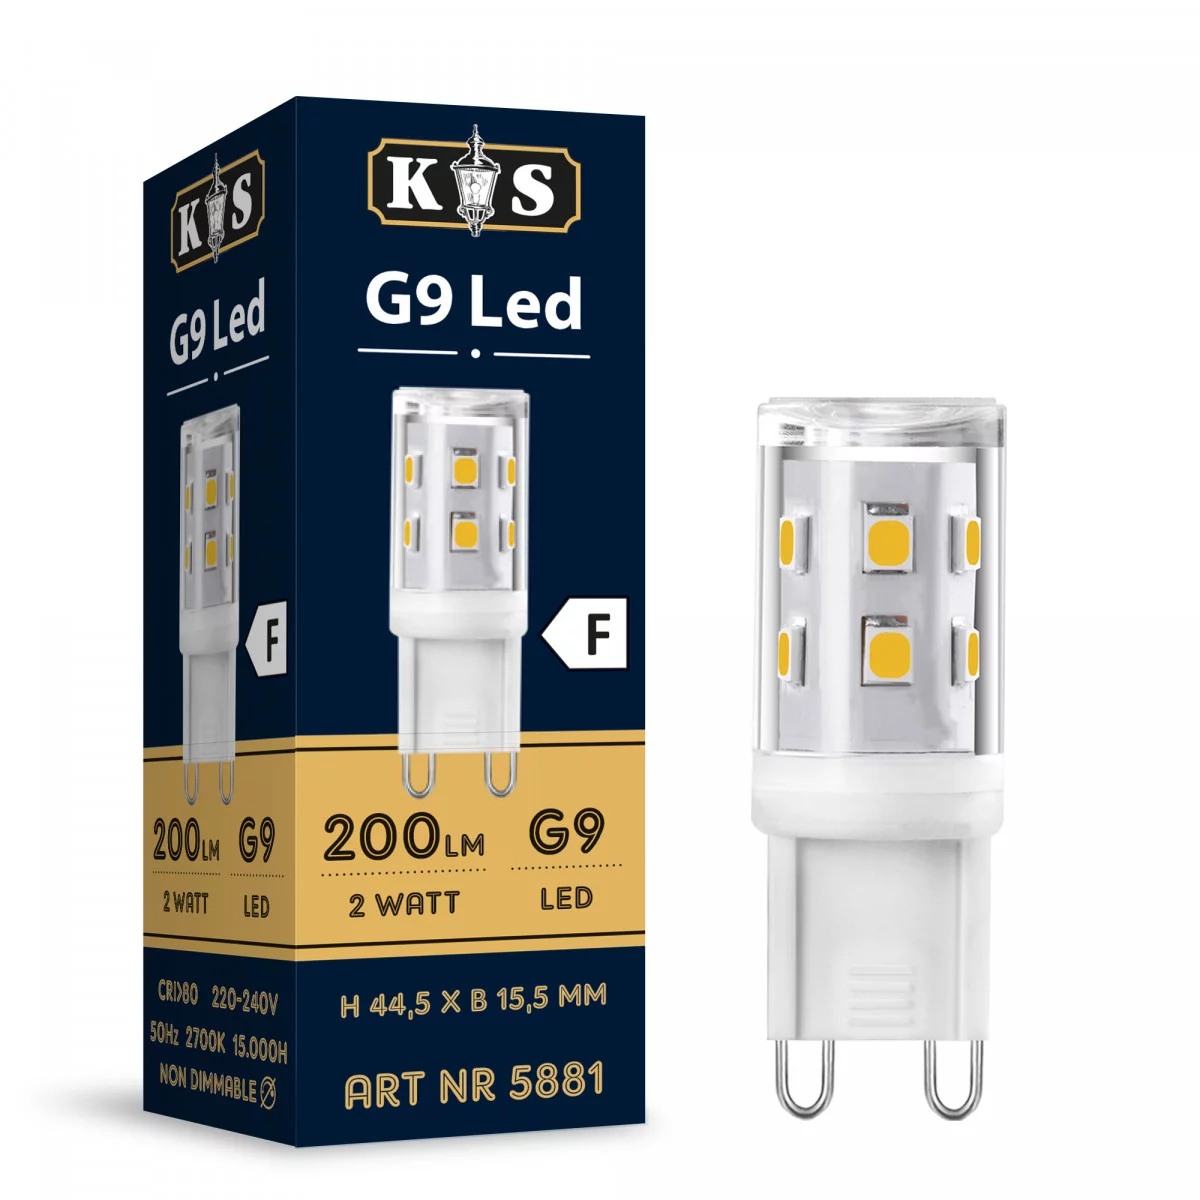 Seminarie Lot Ten einde raad LED Lamp G9 2W | Officiële site KS Verlichting